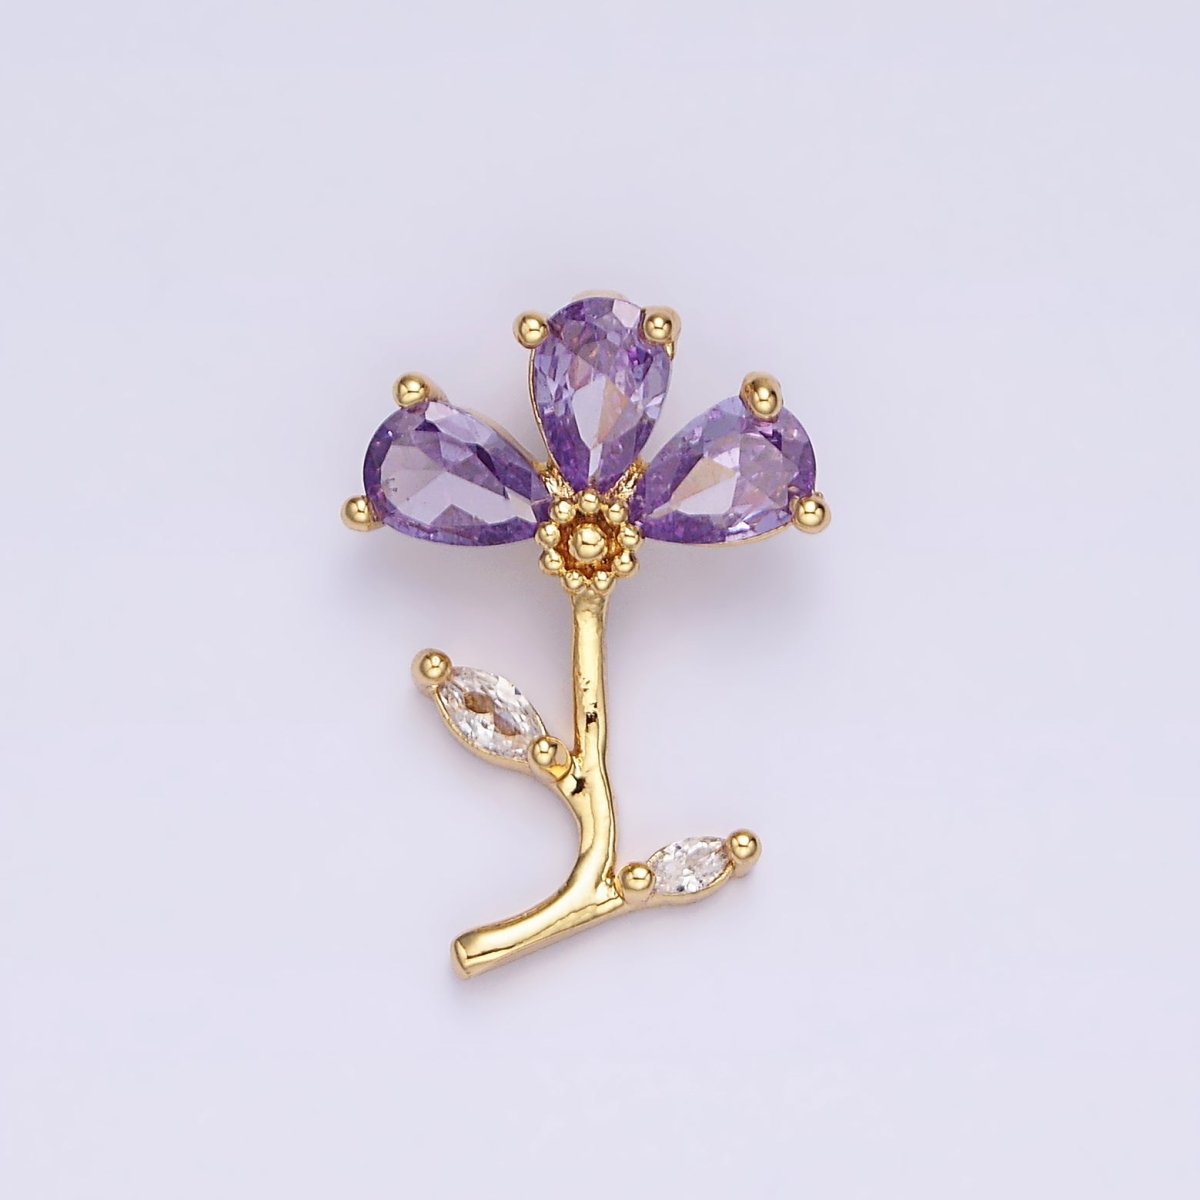 14K Gold Filled Clear, Pink, Purple Teardrop CZ Flower Marquise Leaf Charm | AA639 - AA641 - DLUXCA